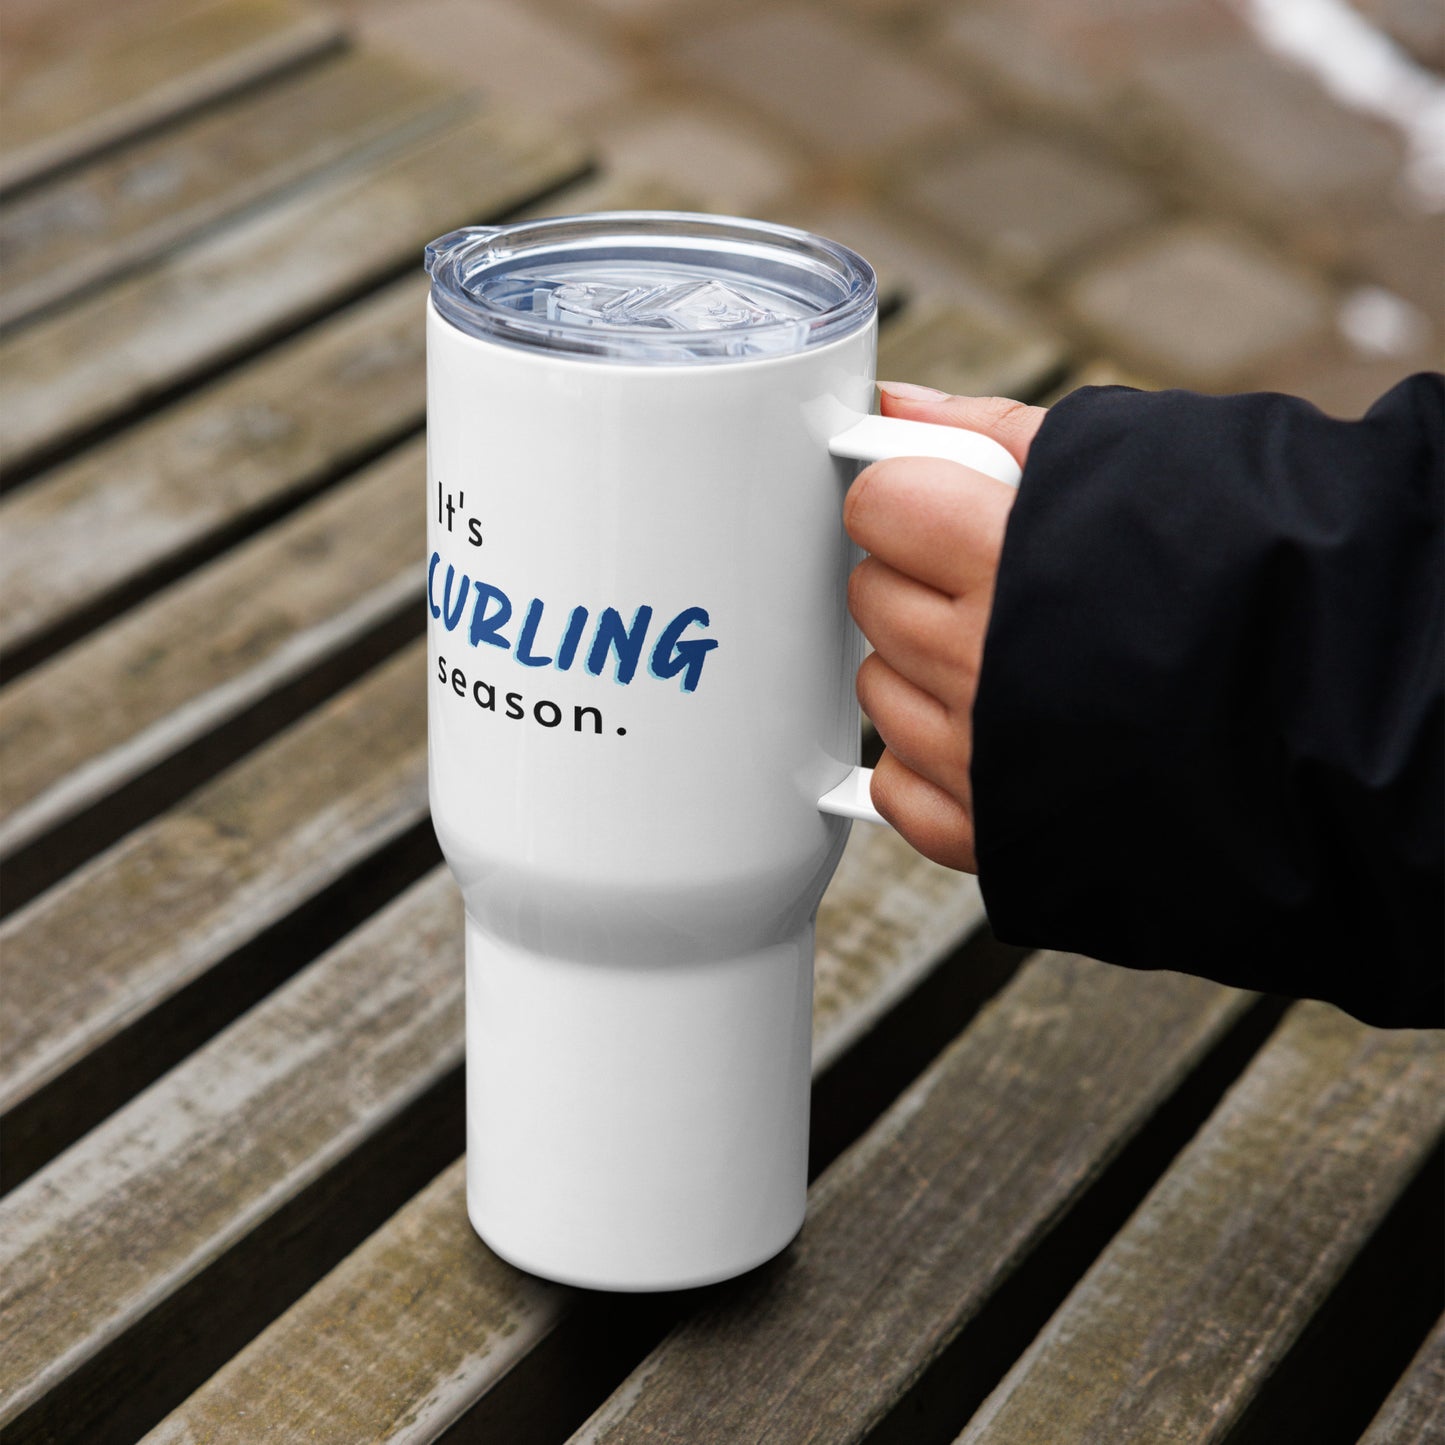 It's curling season travel mug